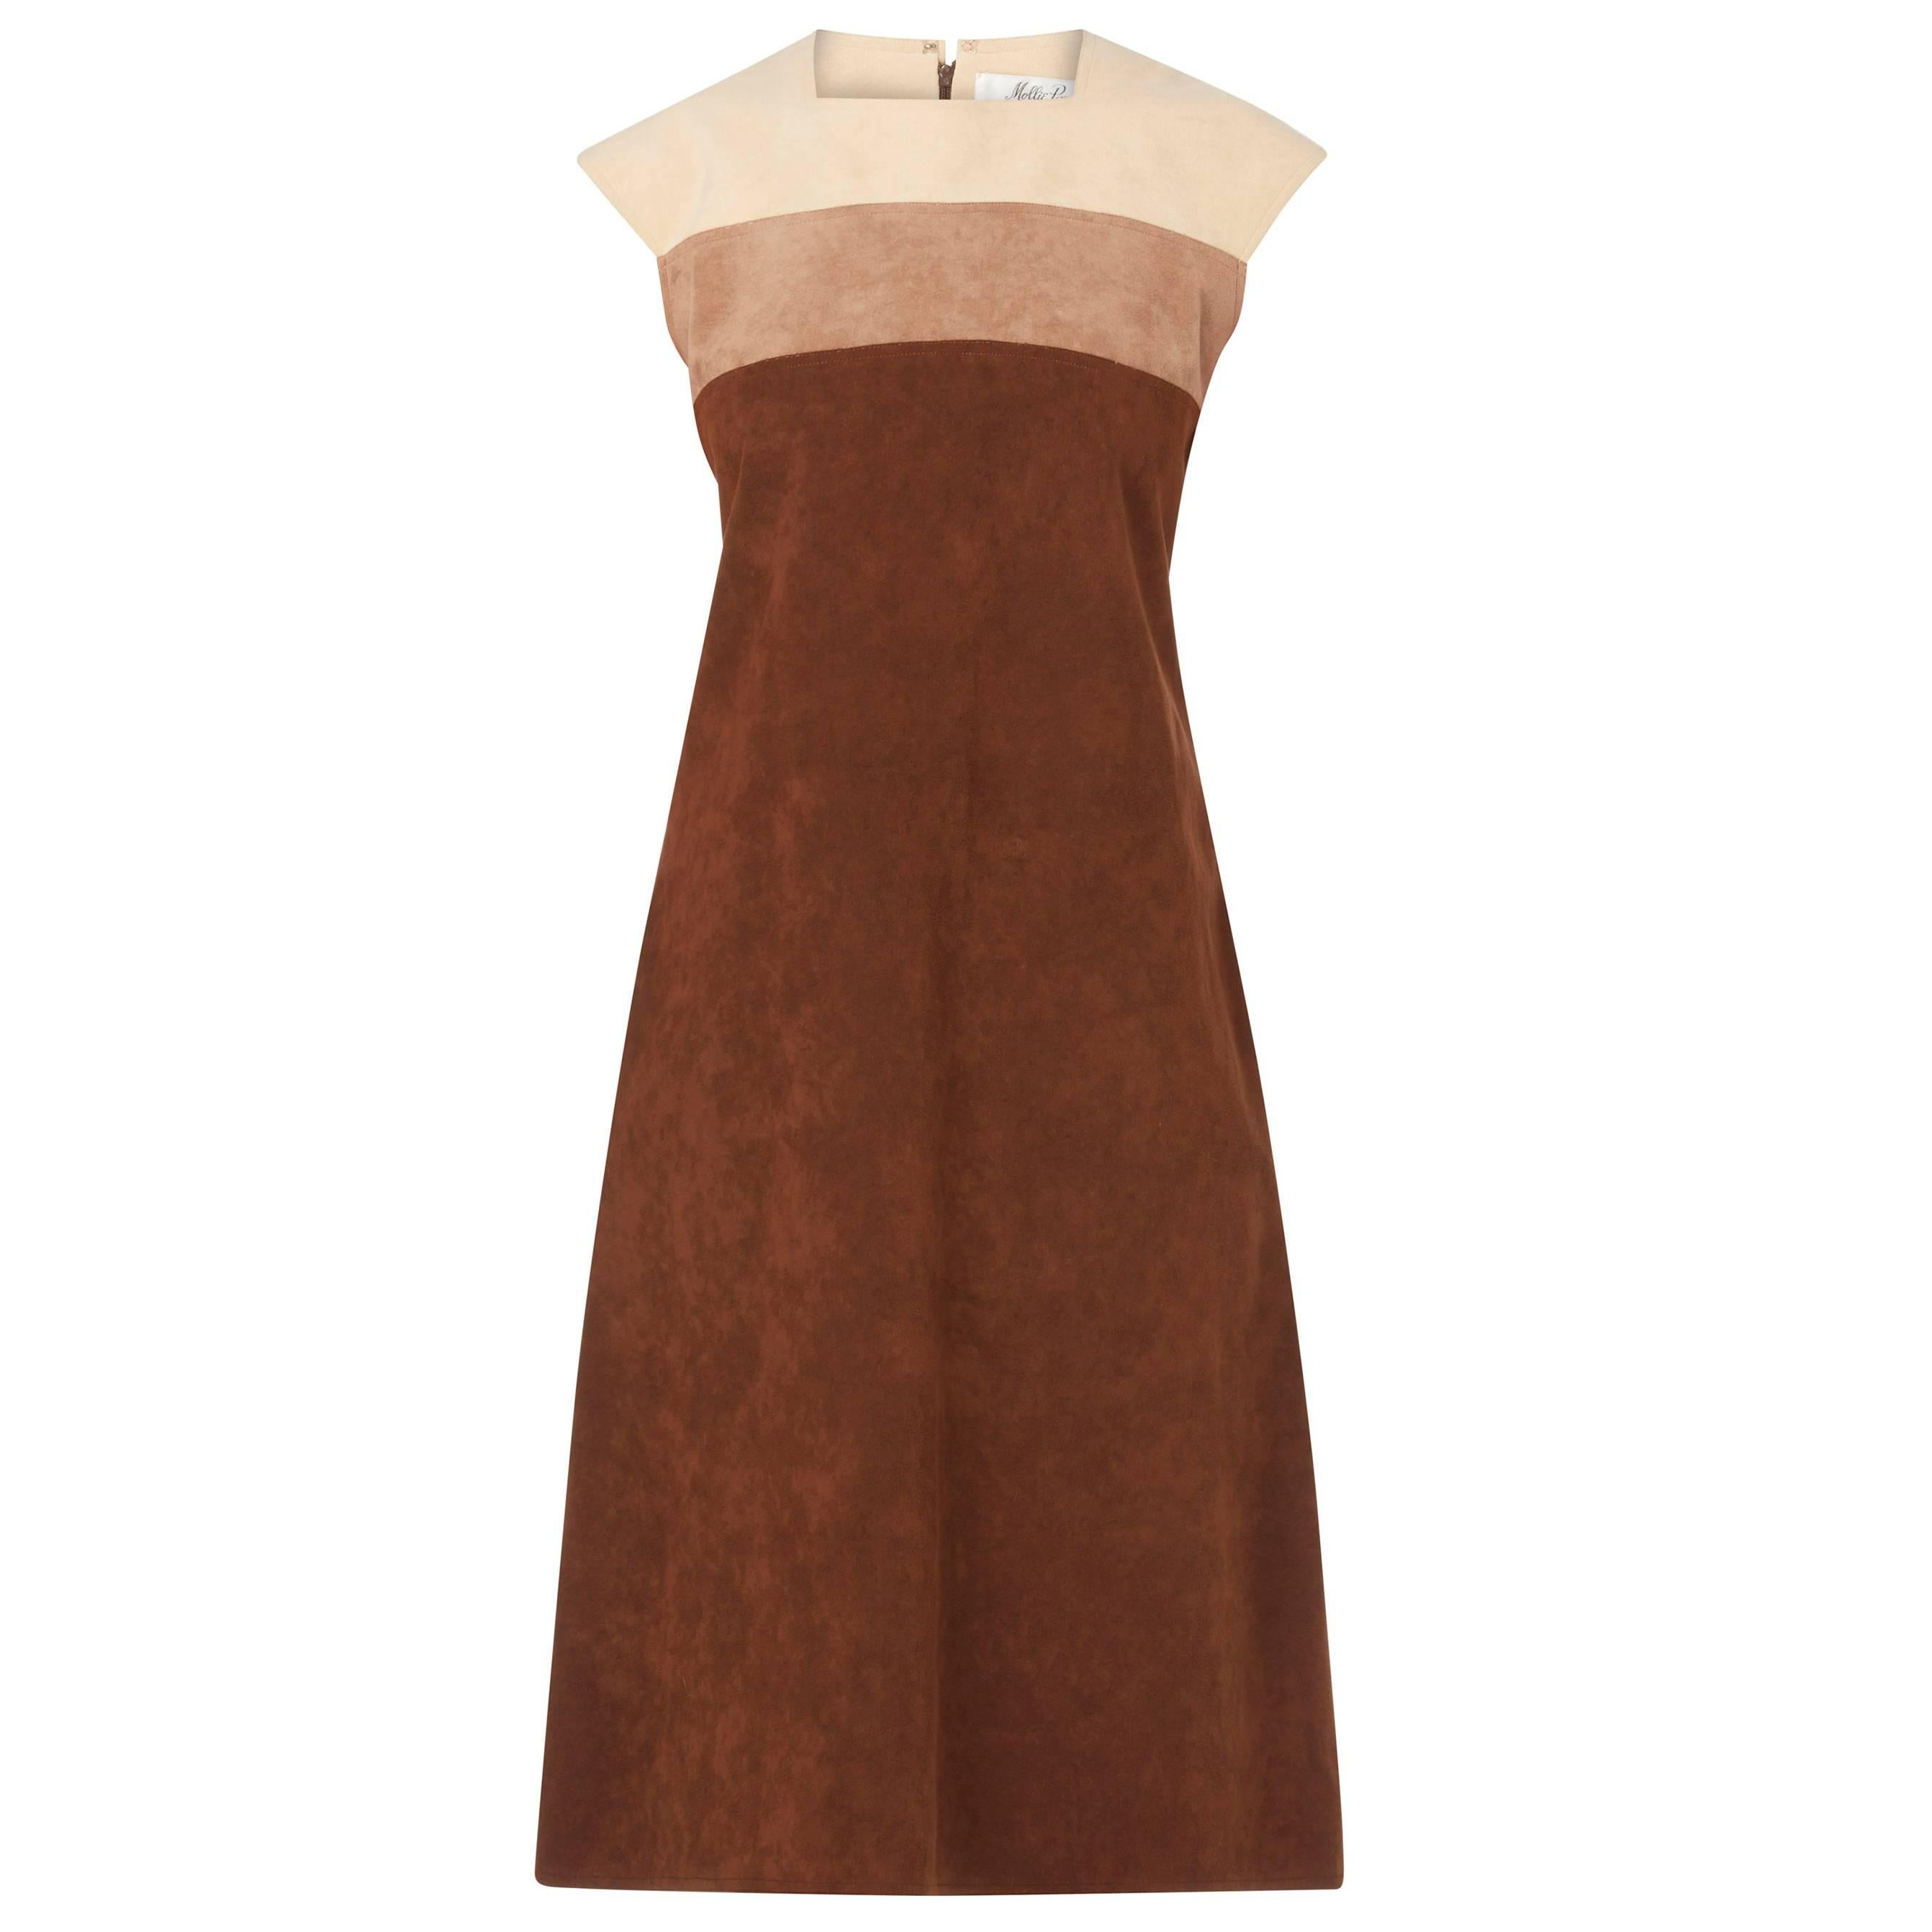 Mollie Parnis brown dress, circa 1965 For Sale